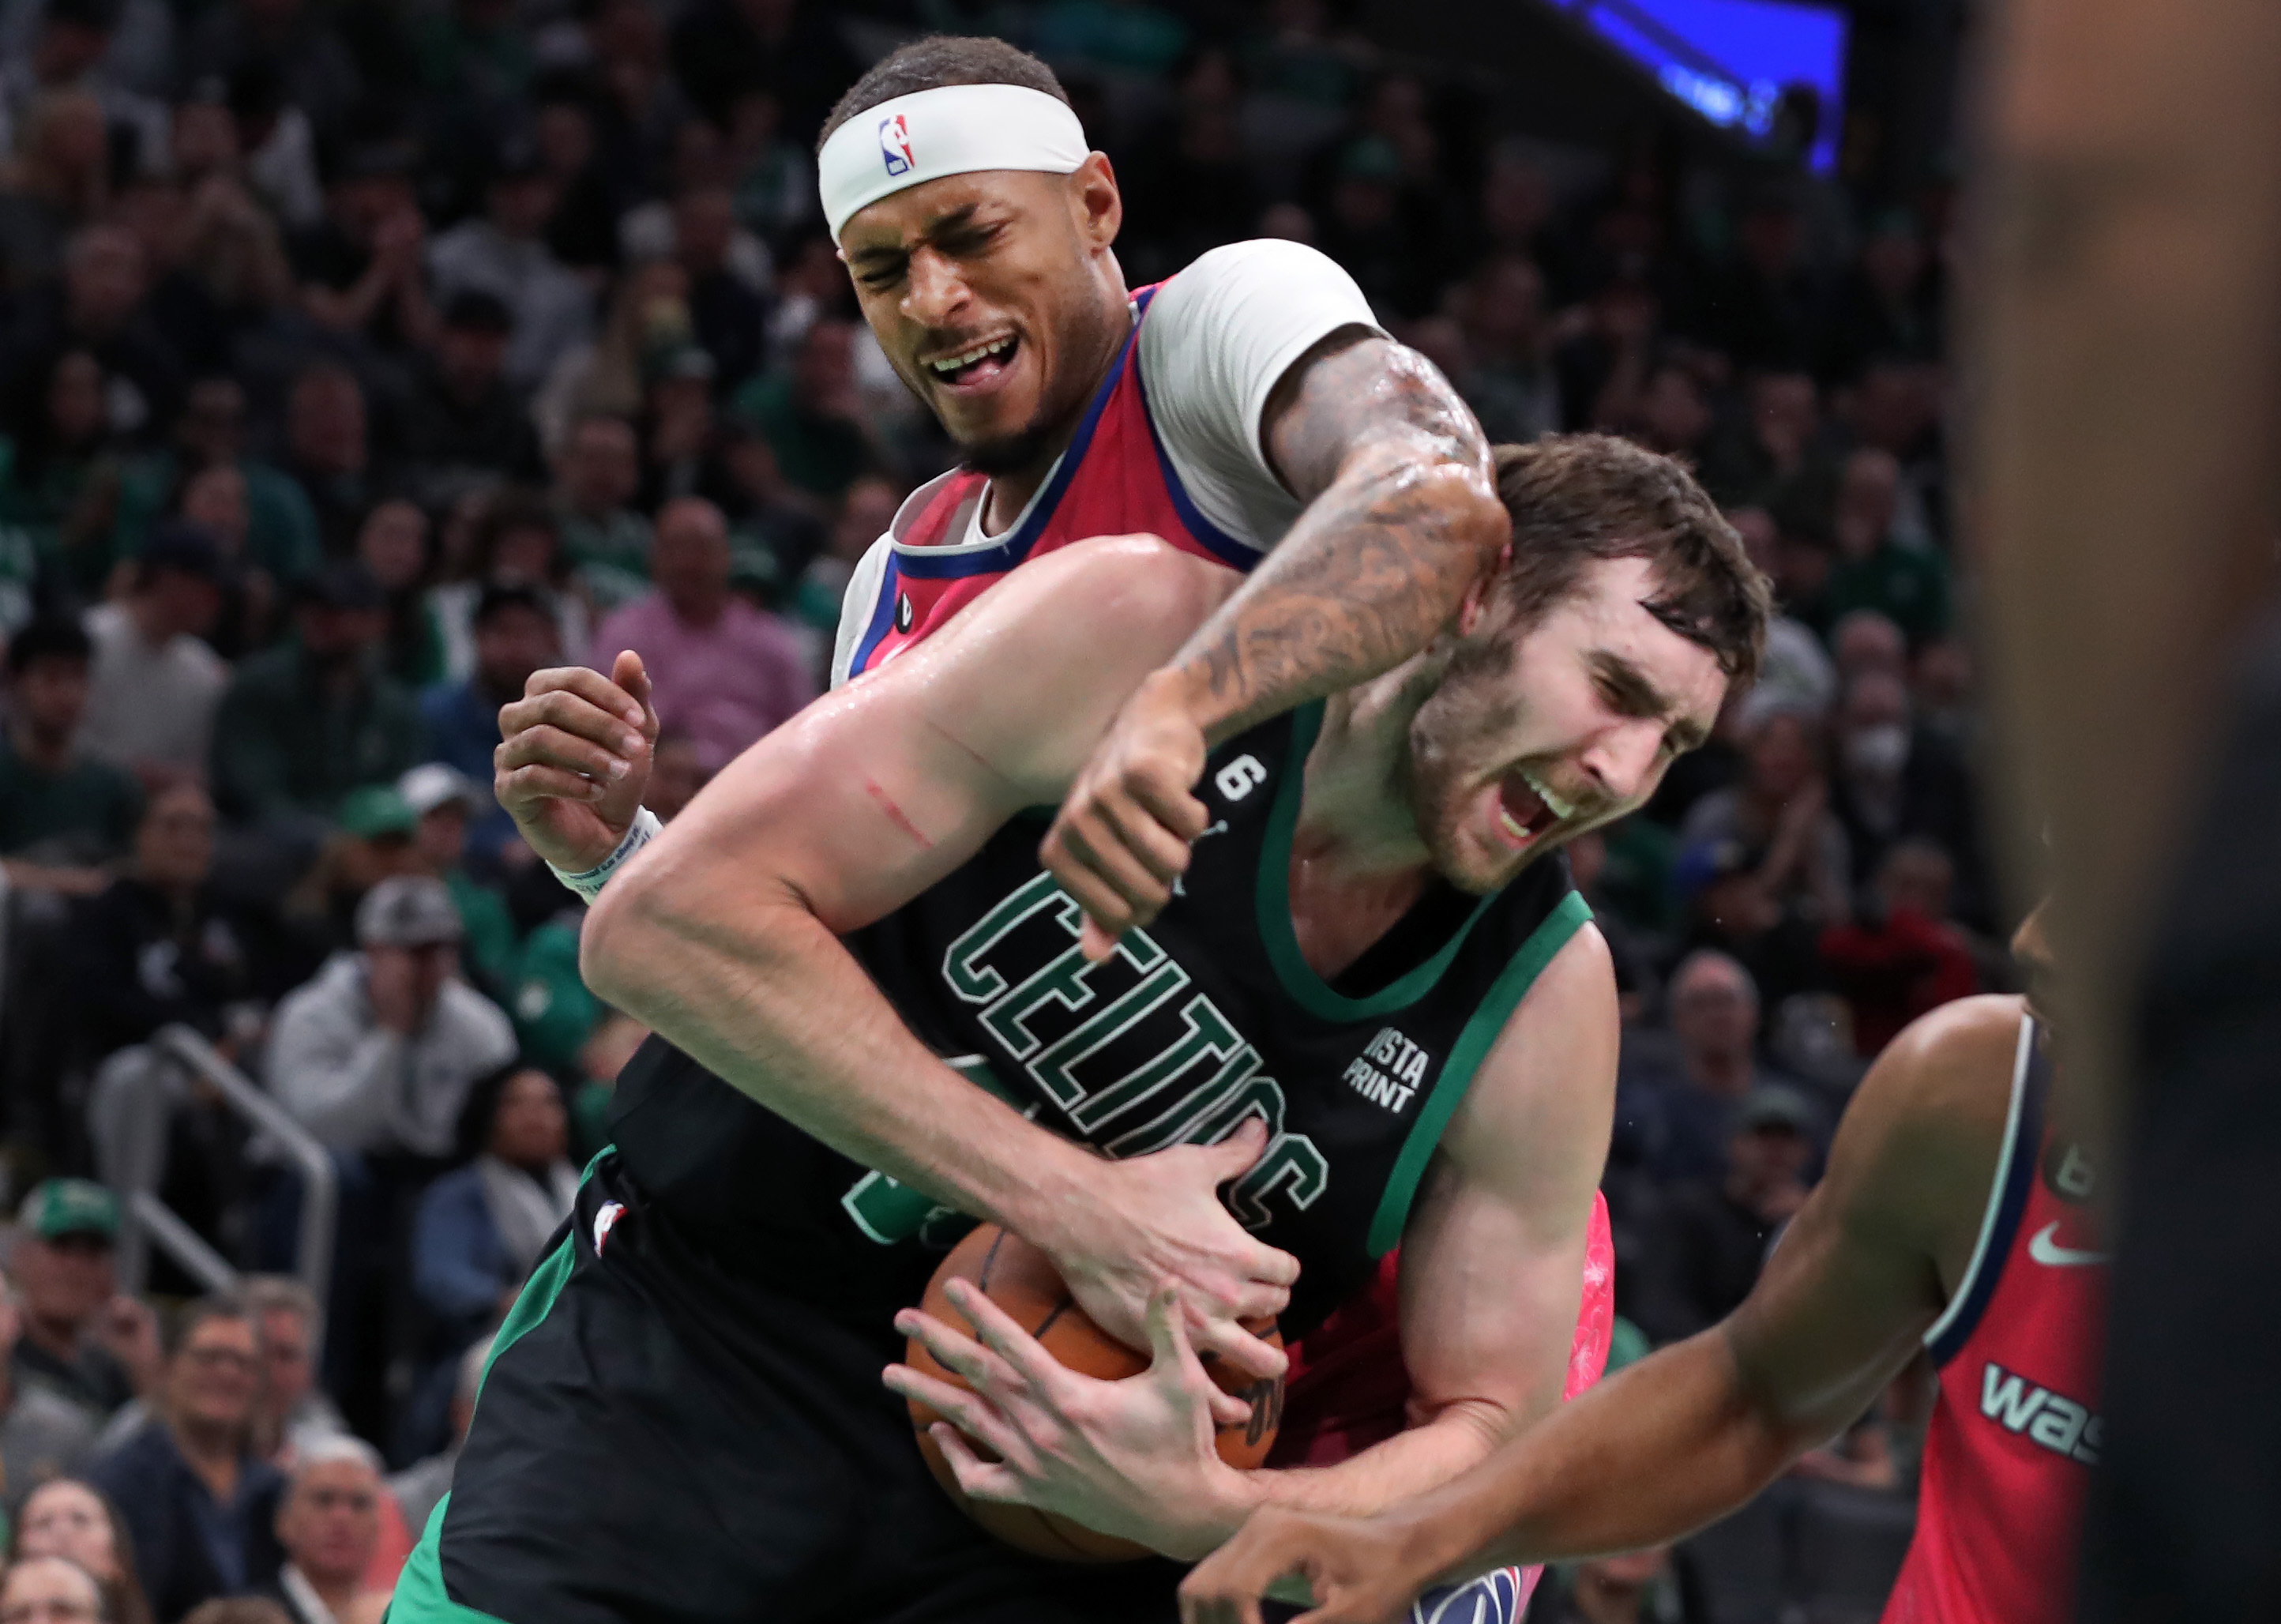 Short-handed Wizards rout Celtics 130-111